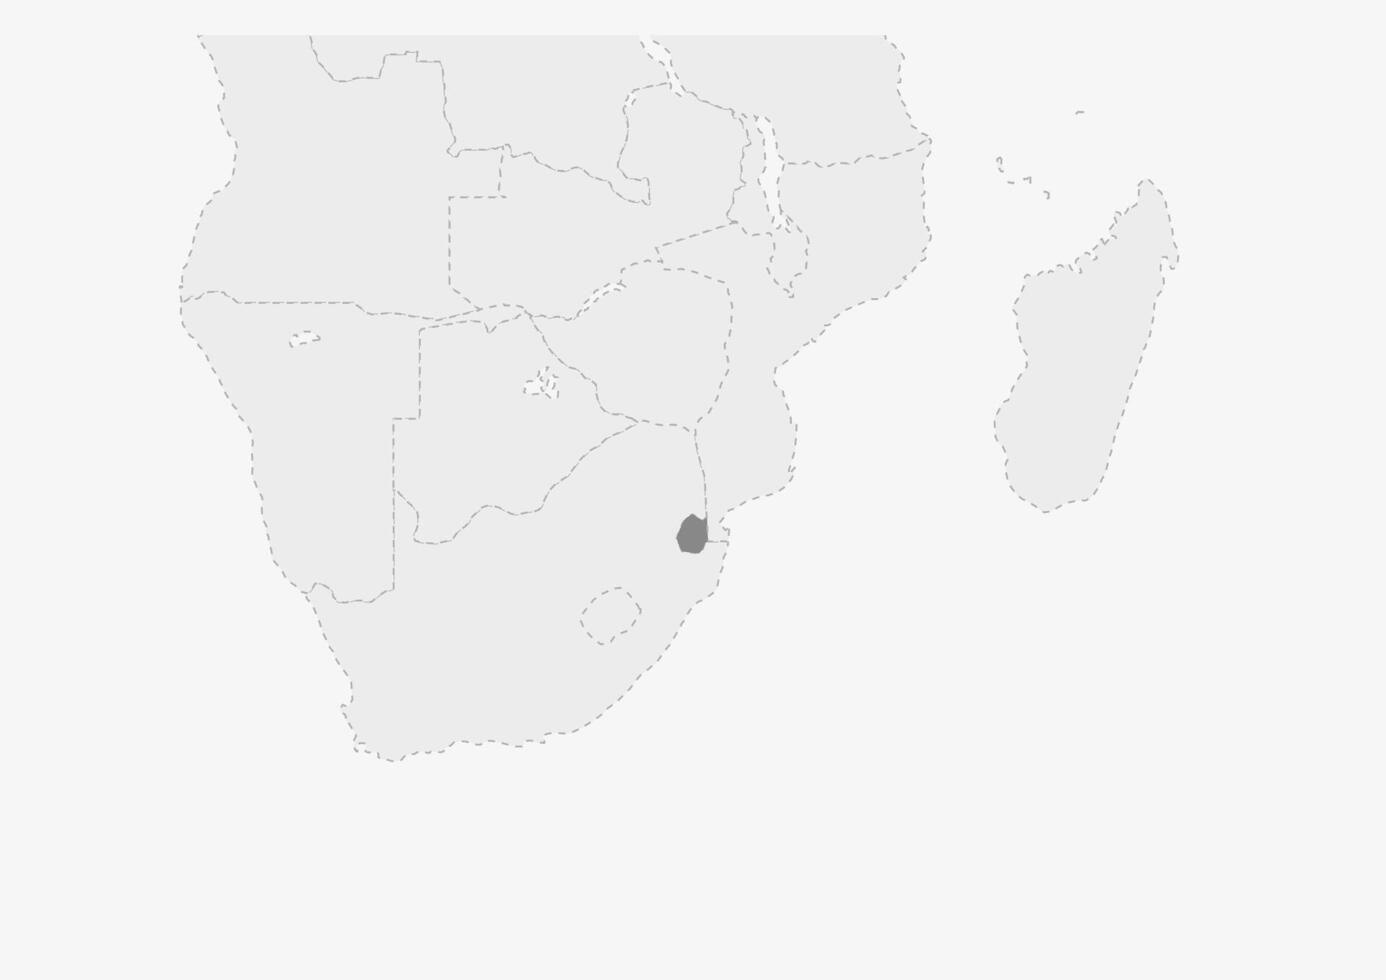 Karte von Afrika mit hervorgehoben Swasiland Karte vektor